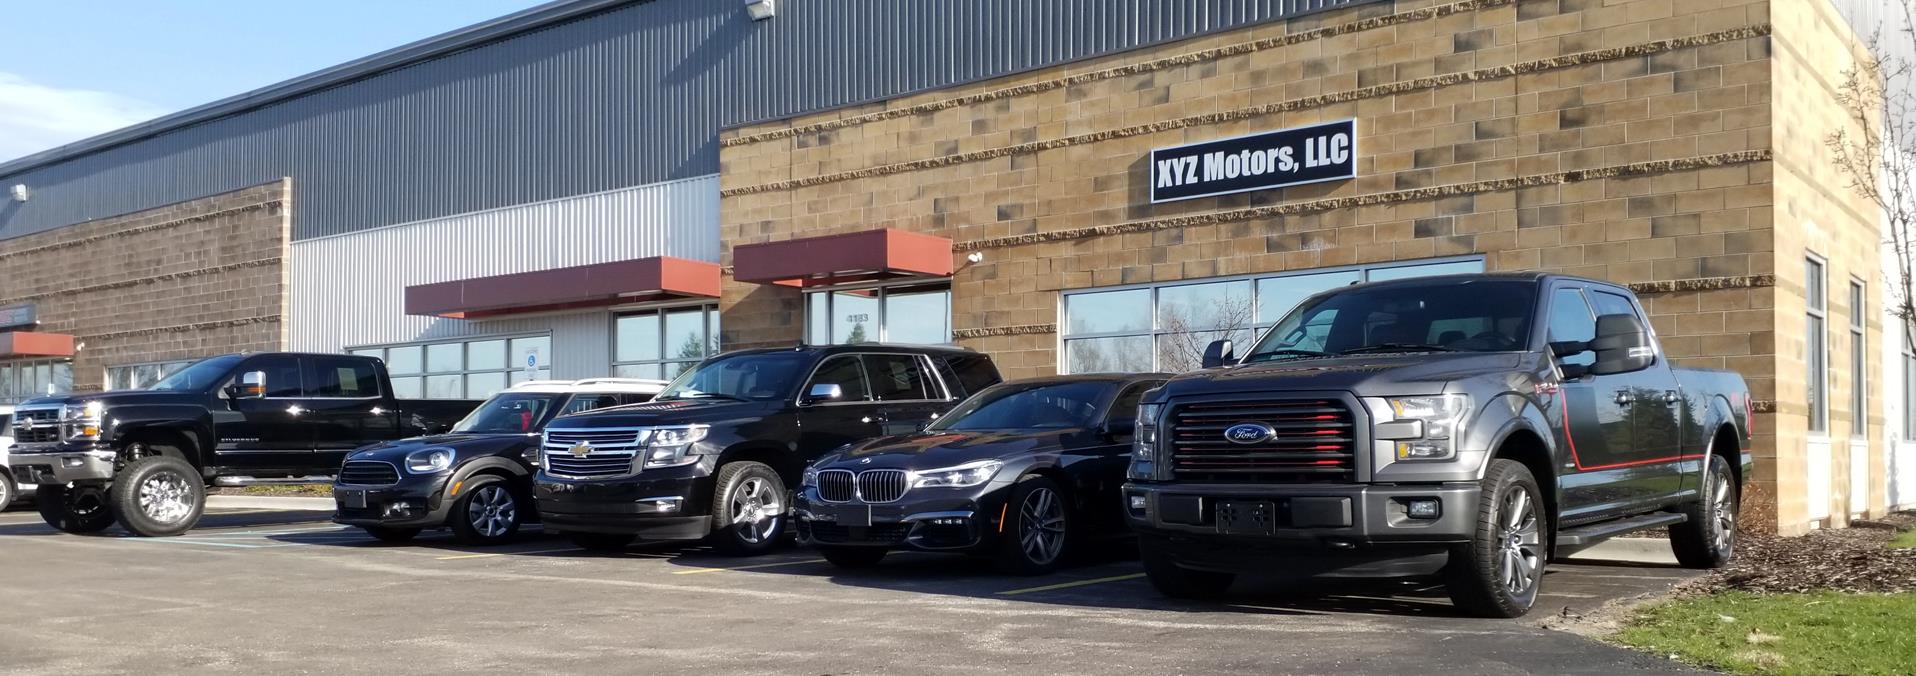 Used Cars Grand Rapids MI | Used Cars & Trucks MI | XYZ Motors